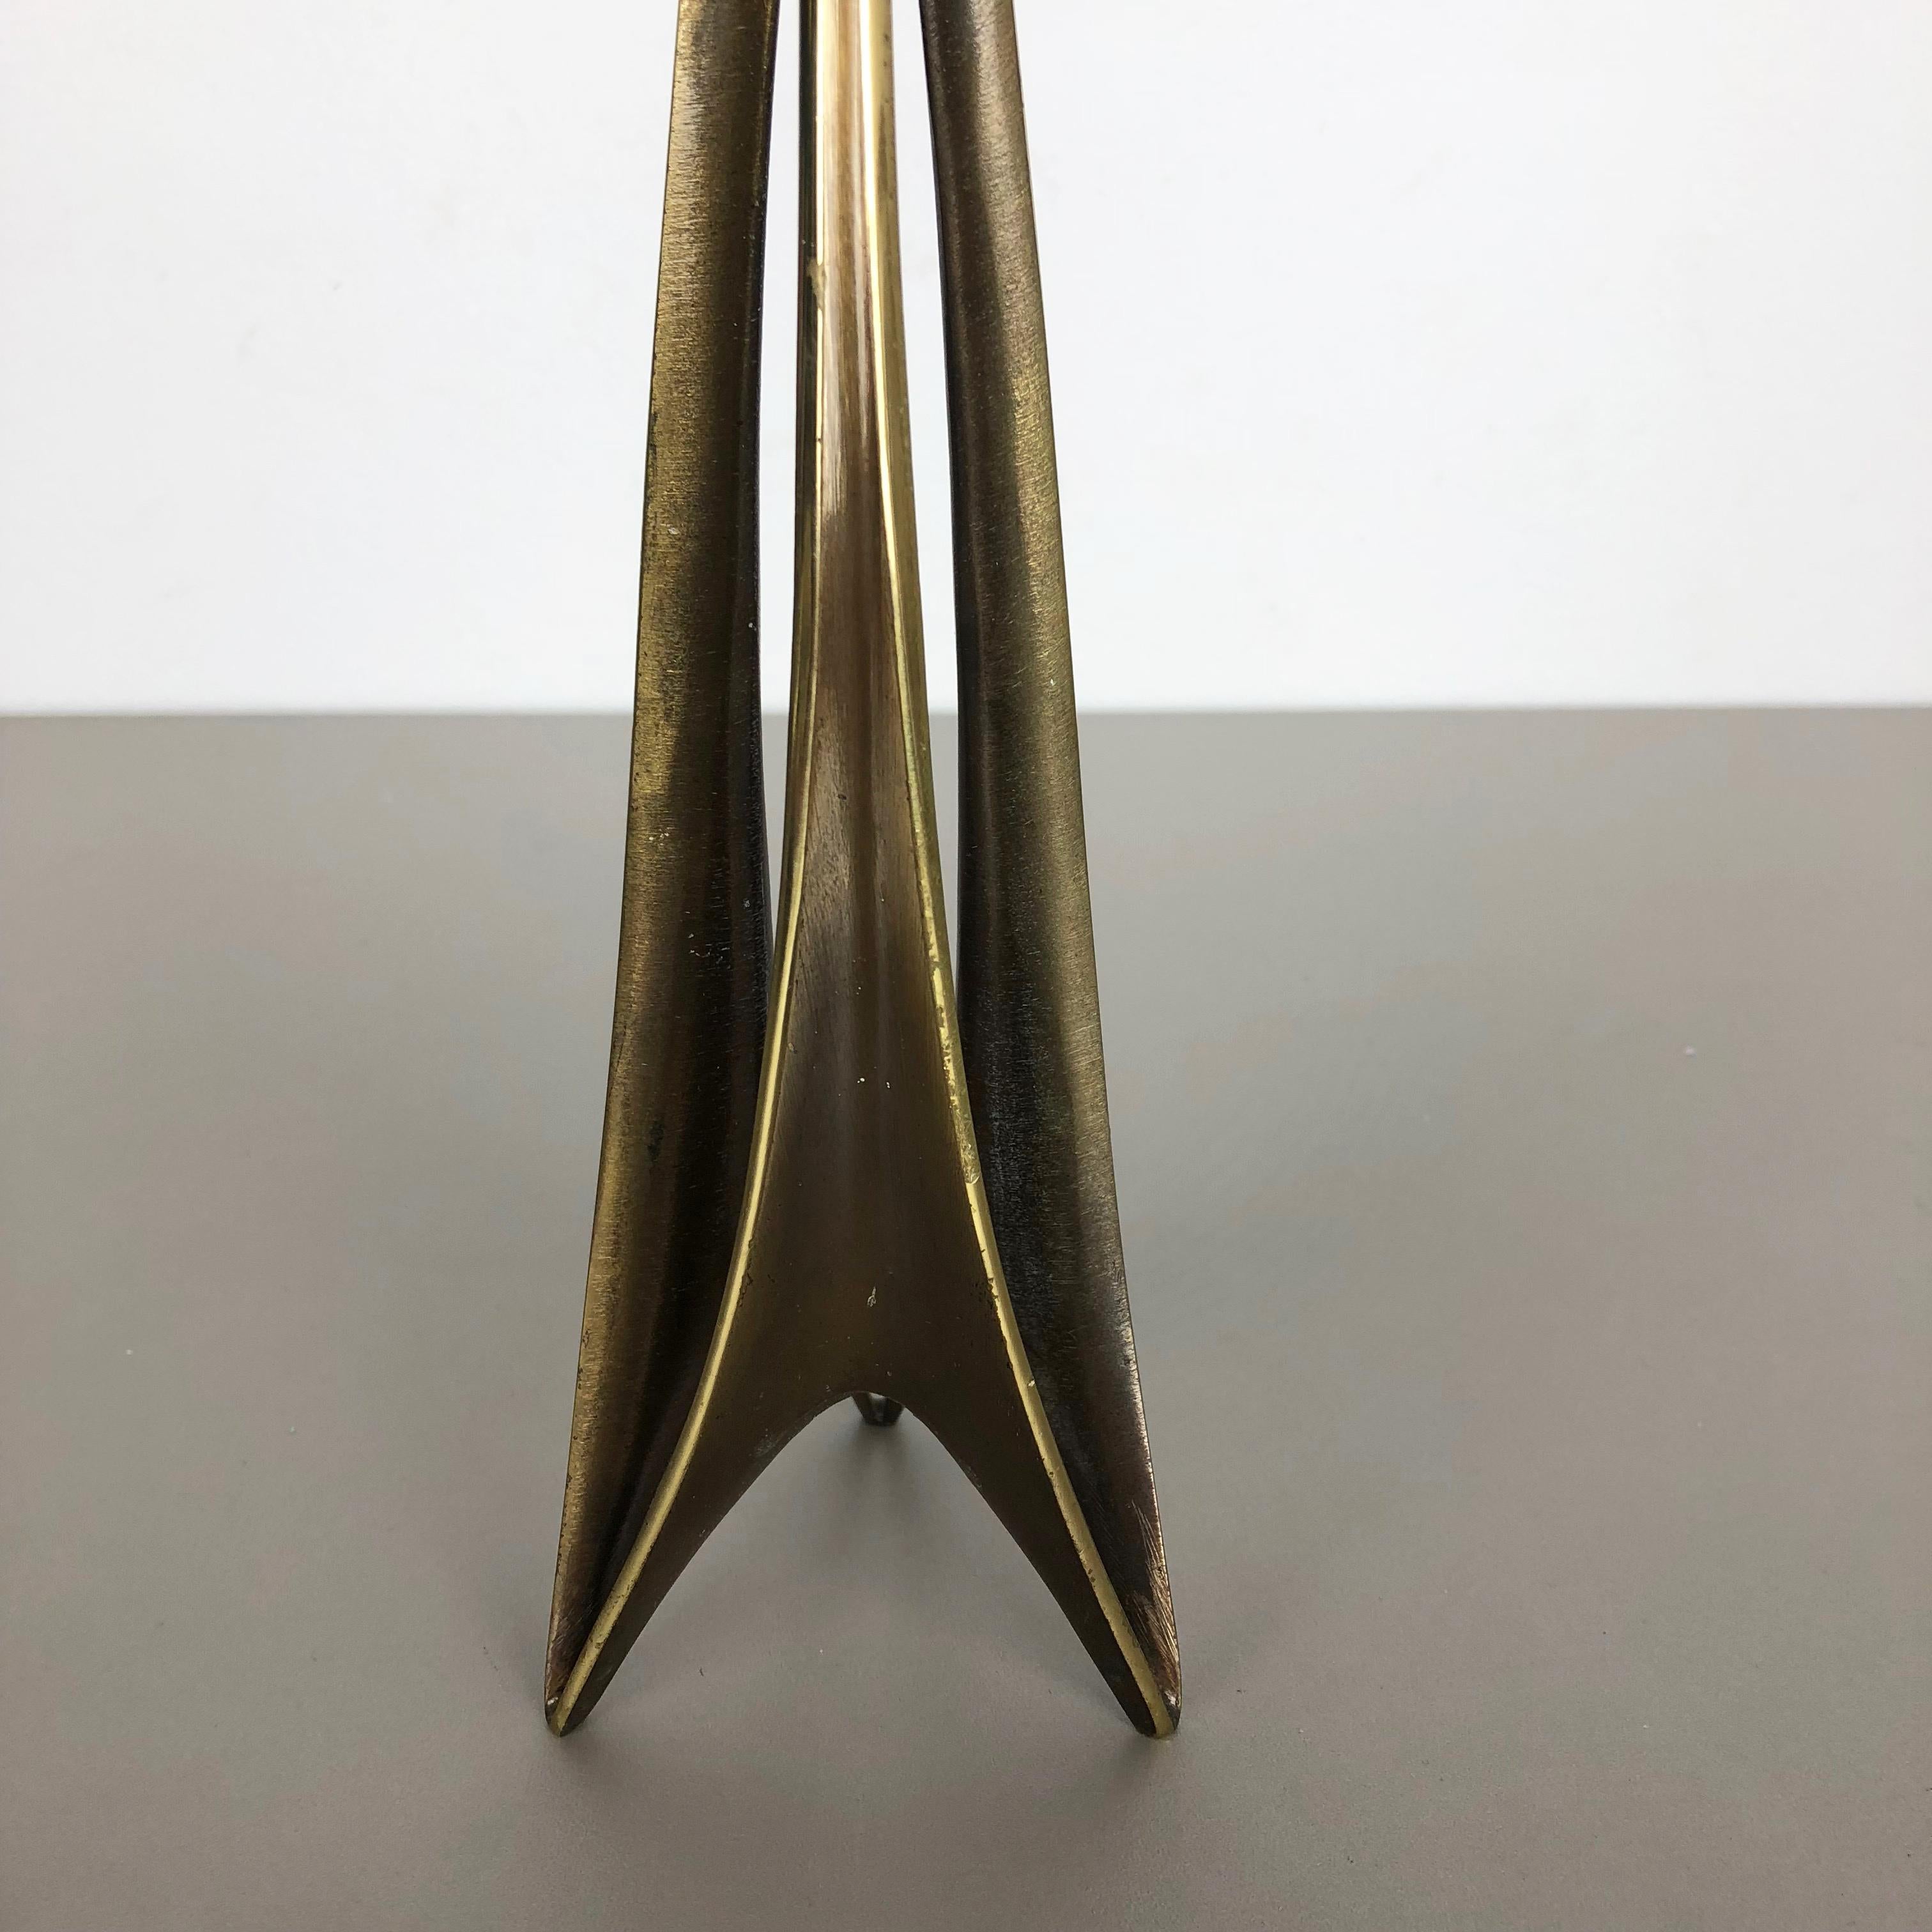 20th Century Brutalist Brass Metal Candleholder by Klaus Ullrich for Faber & Schumacher 1950s